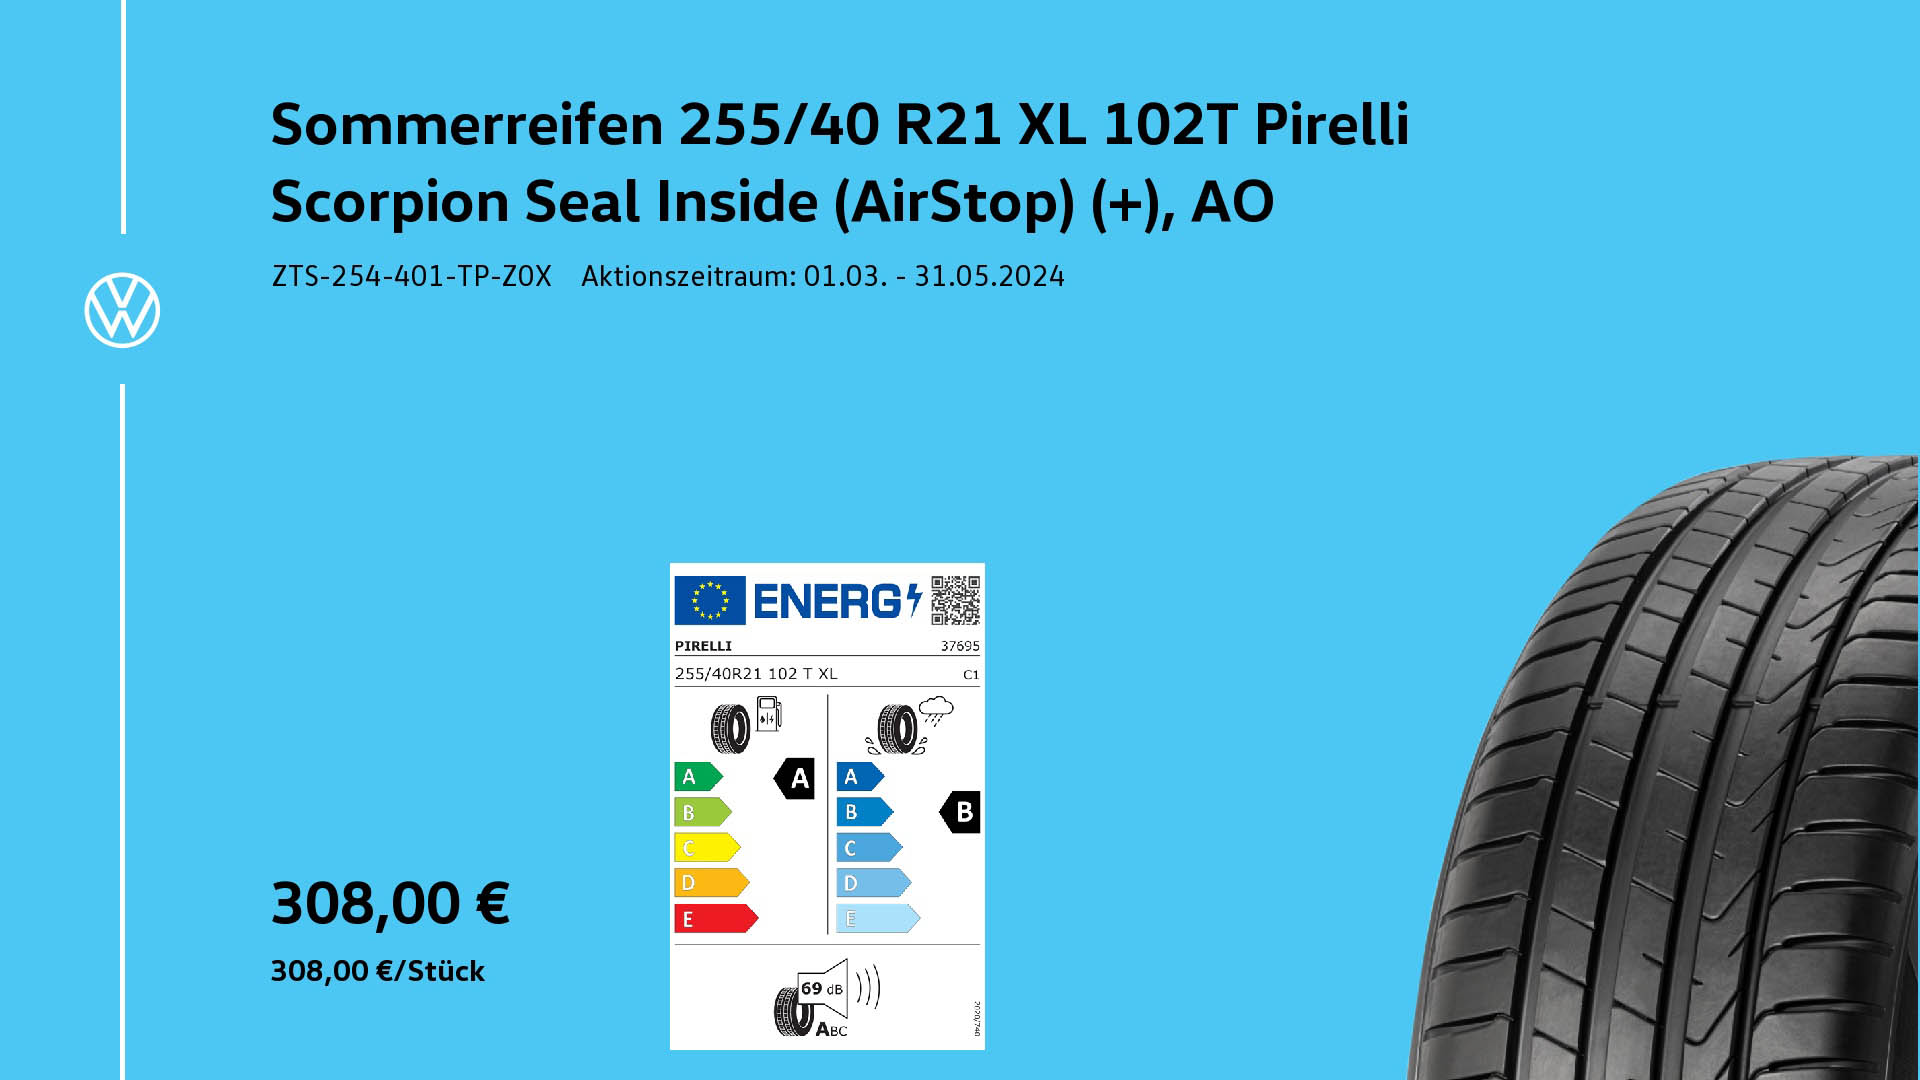 200 Sommerreifen Pirelli Scorpion Seal Inside AirStop Autohaus Mura